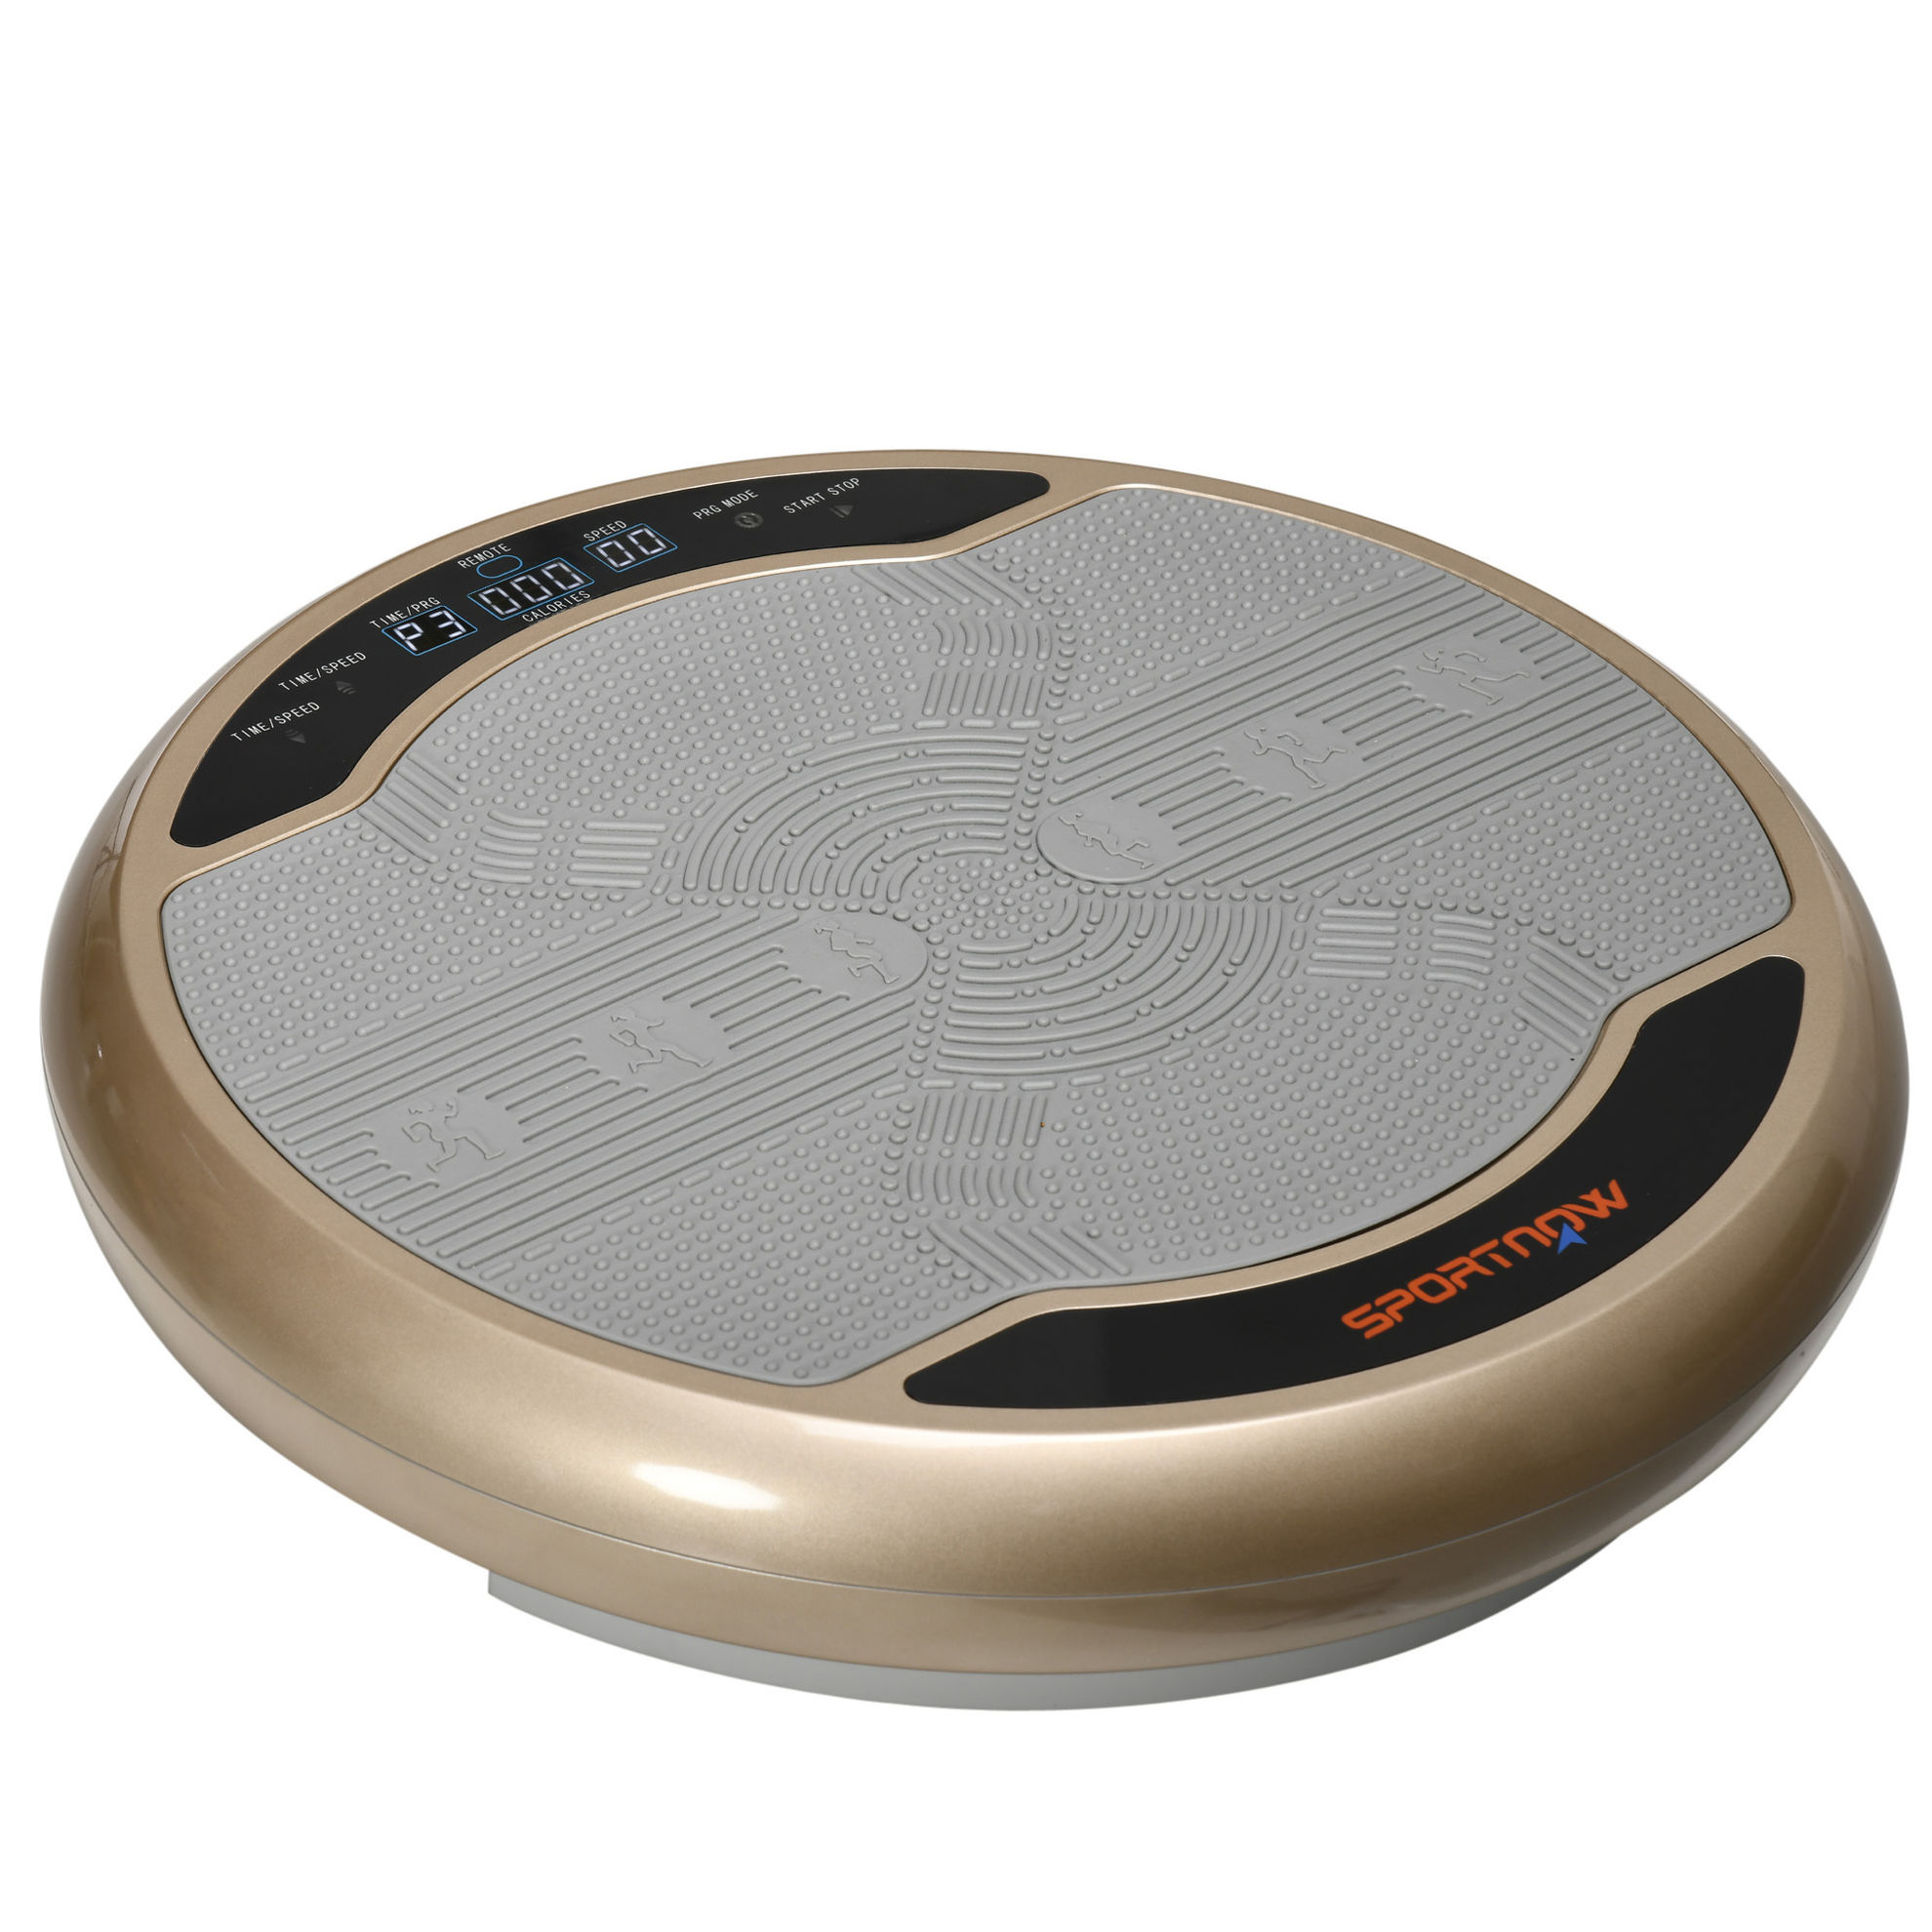 Vibrationsplatte mit Expanderbänder gold, grau Farbe: gold, grau |  Weltbild.de